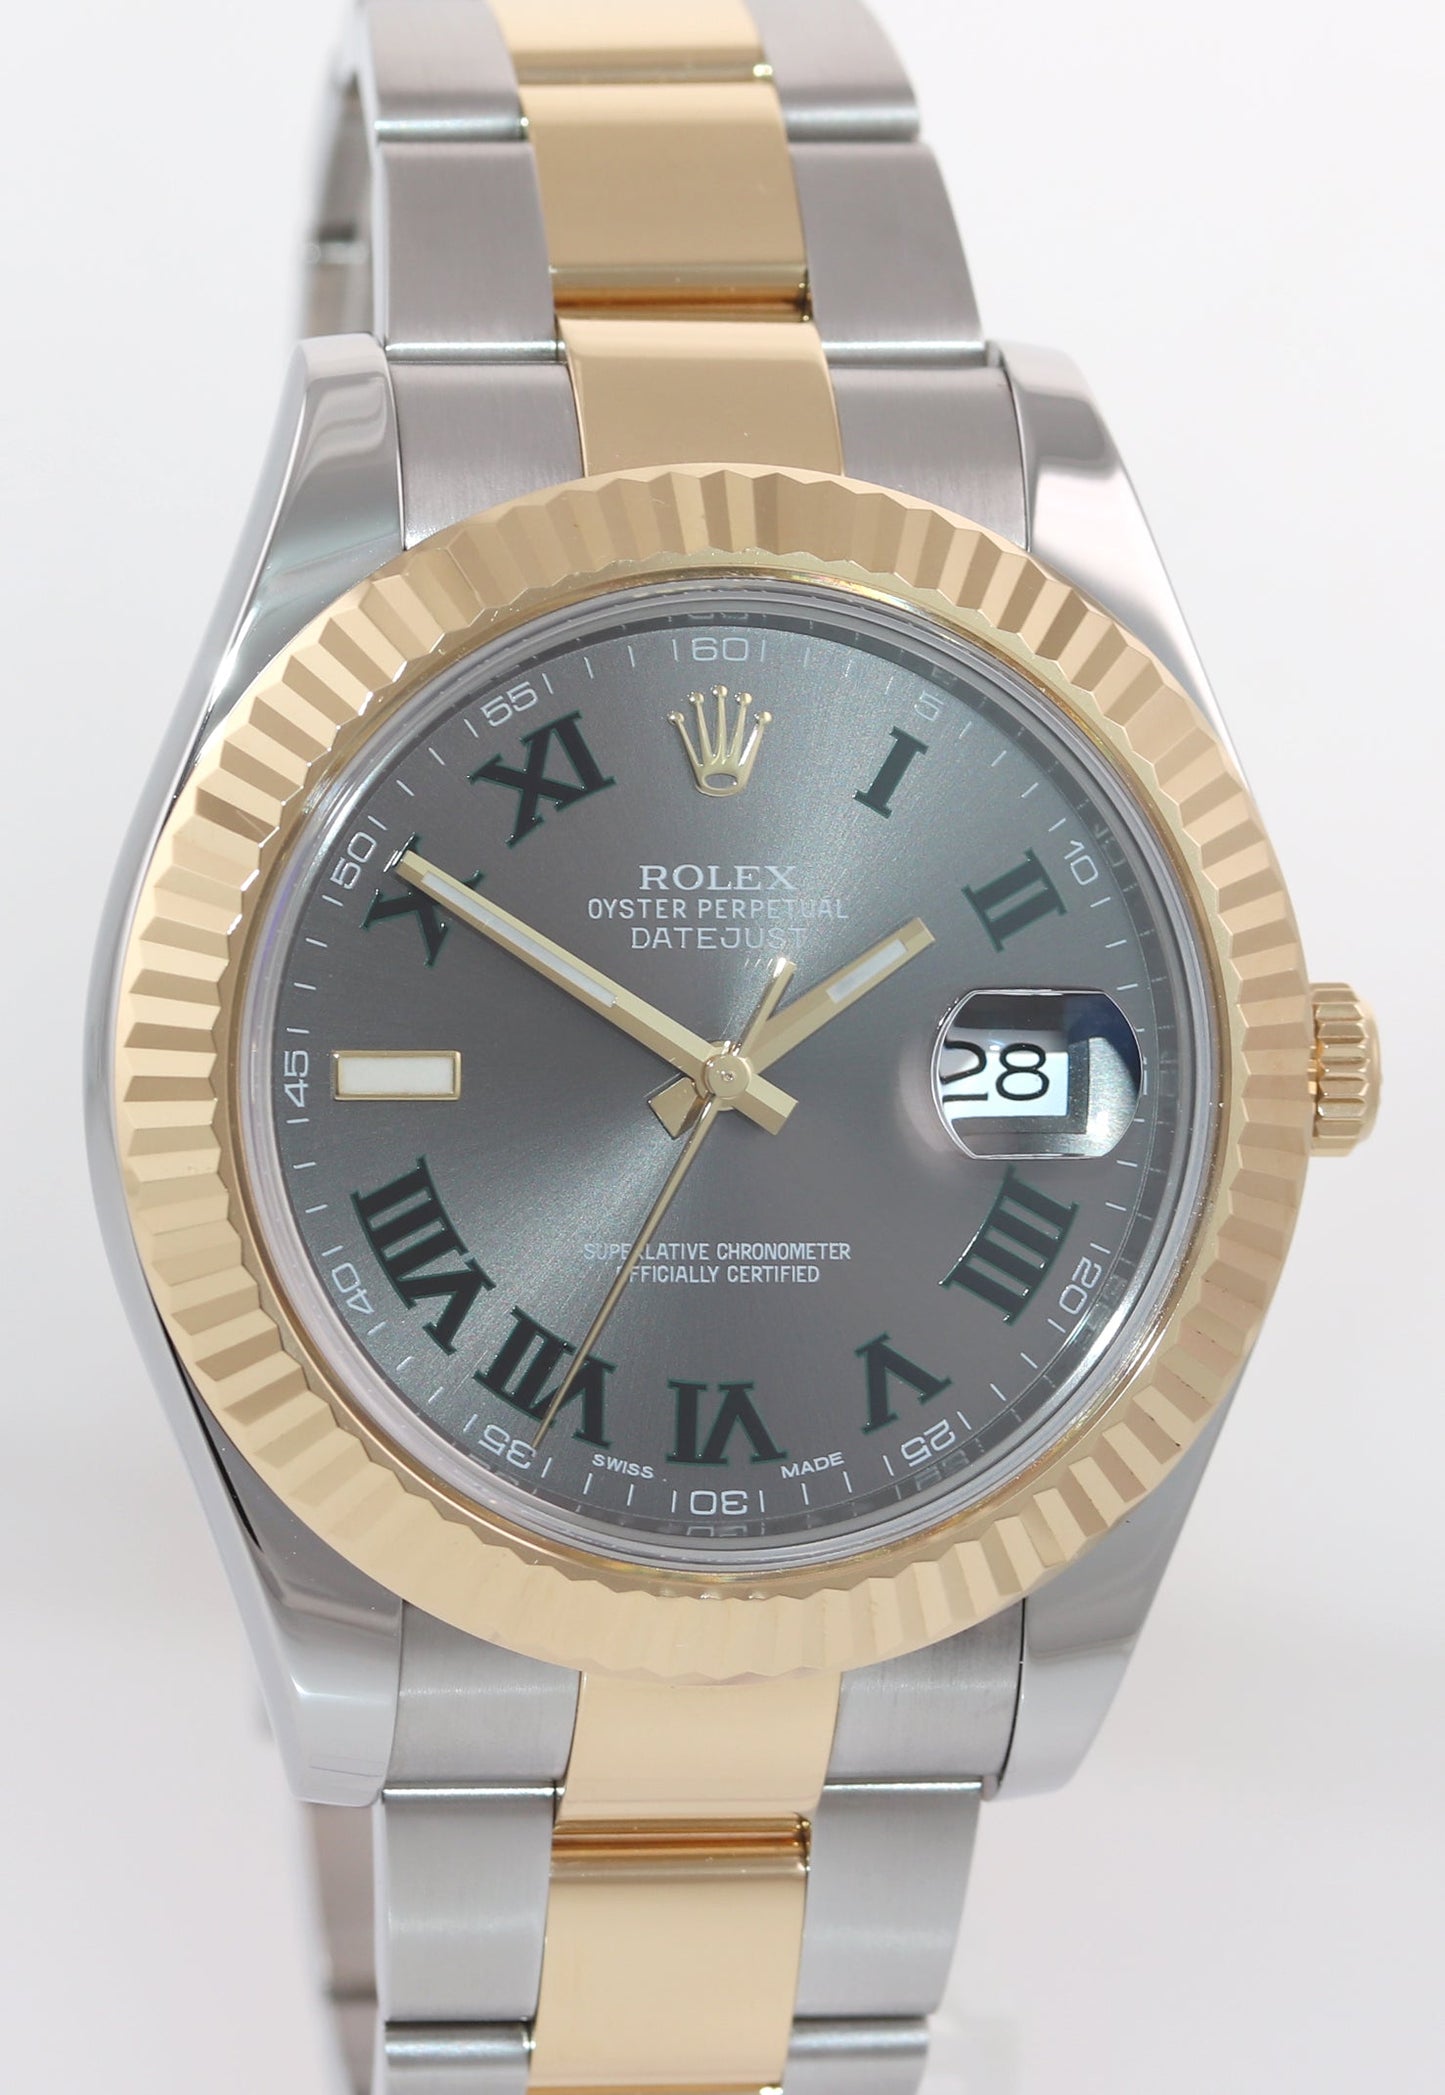 MINT 2015 Rolex Datejust 2 Wimbledon Slate Roman 116333 Two-Tone Gold Watch Box